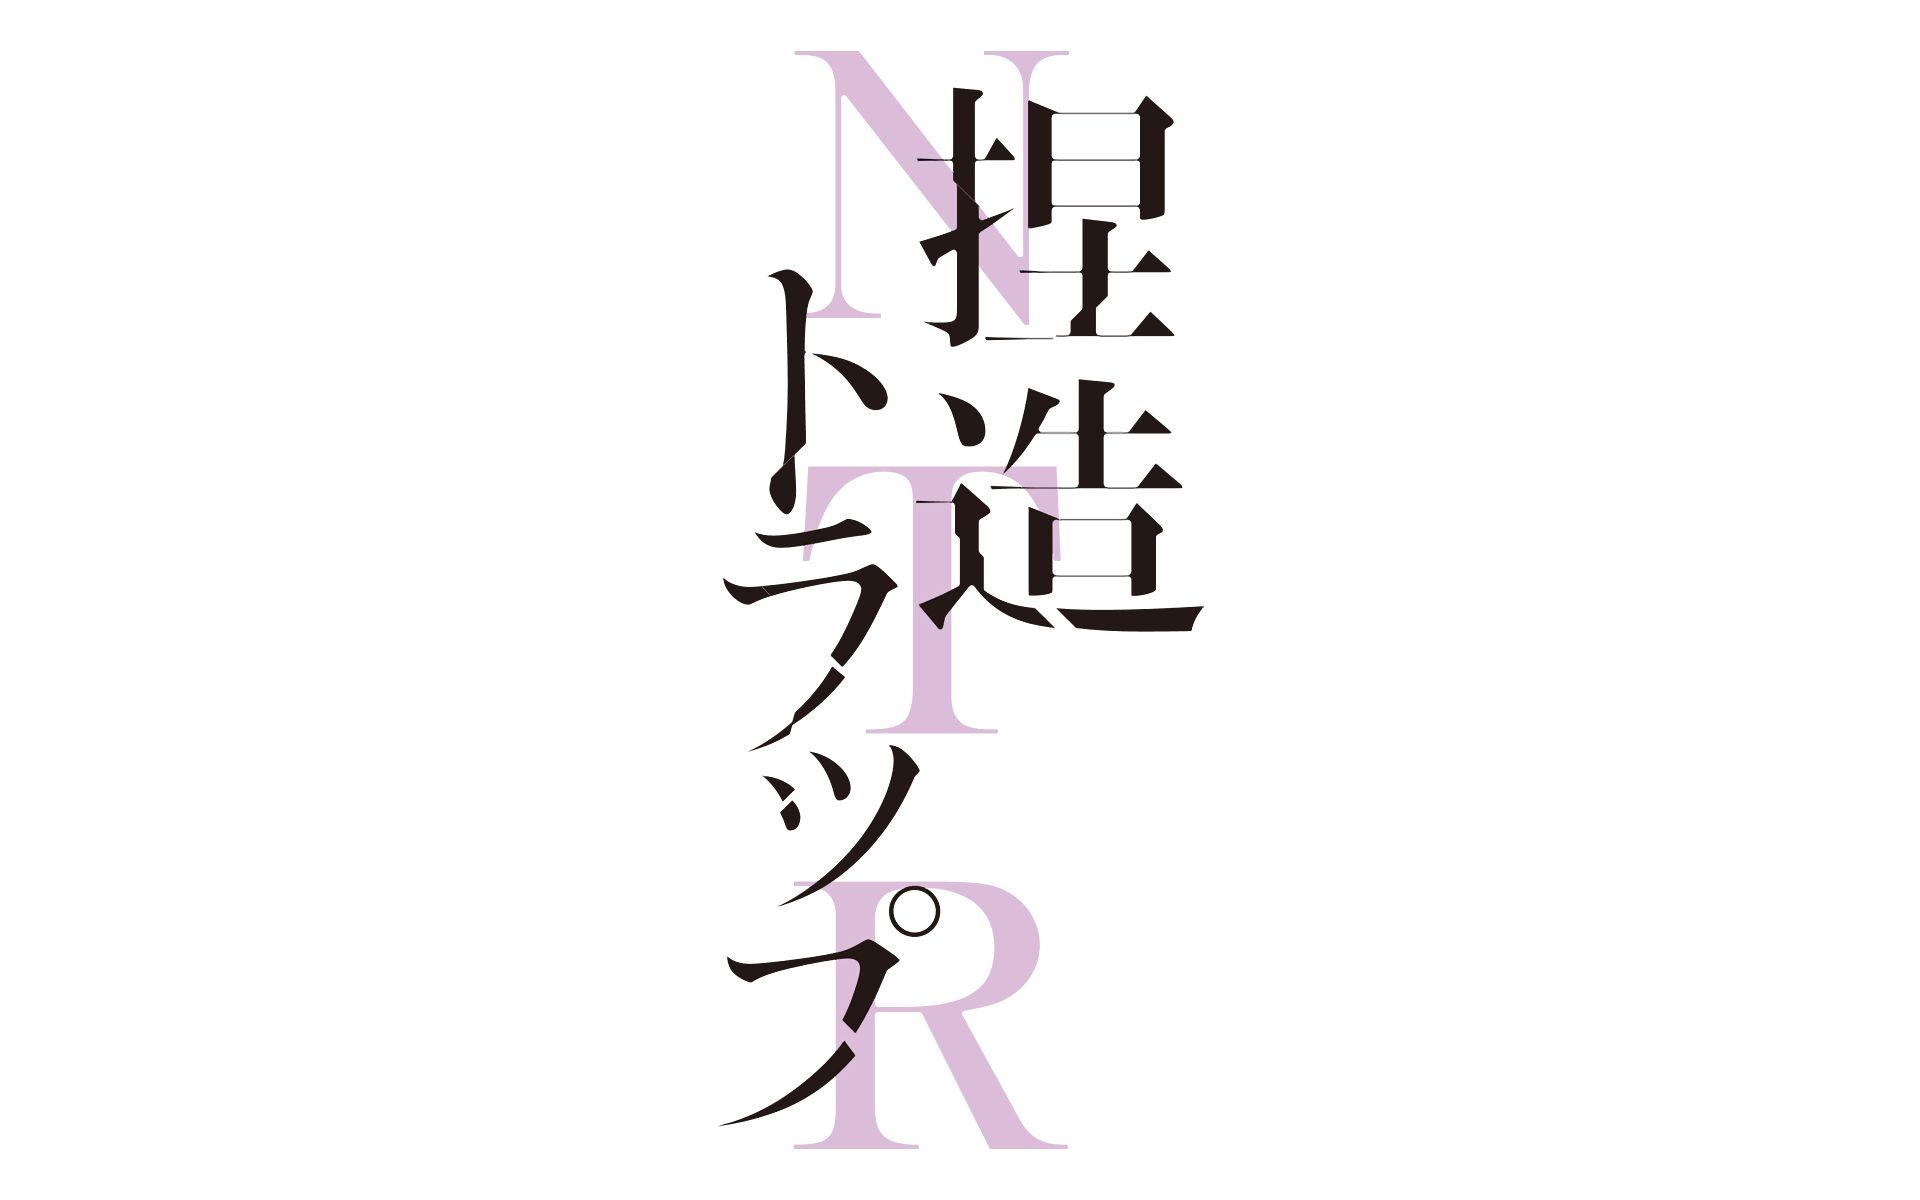 Anime Netsuzou TRap HD Wallpaper